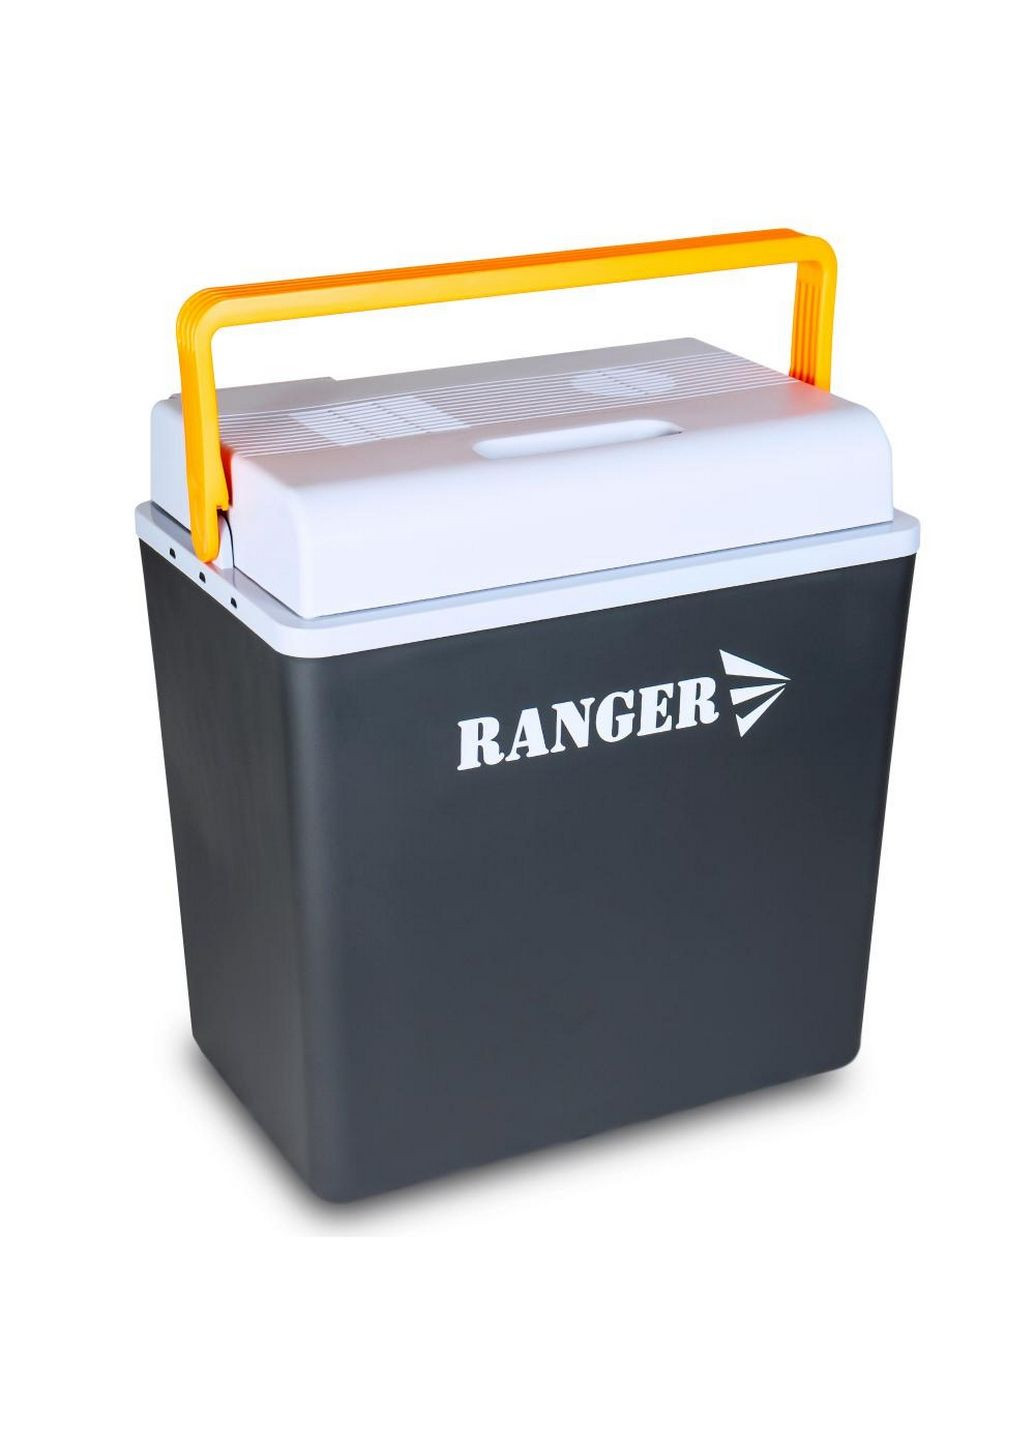 Автохолодильник Cool 30L Ranger (292577297)